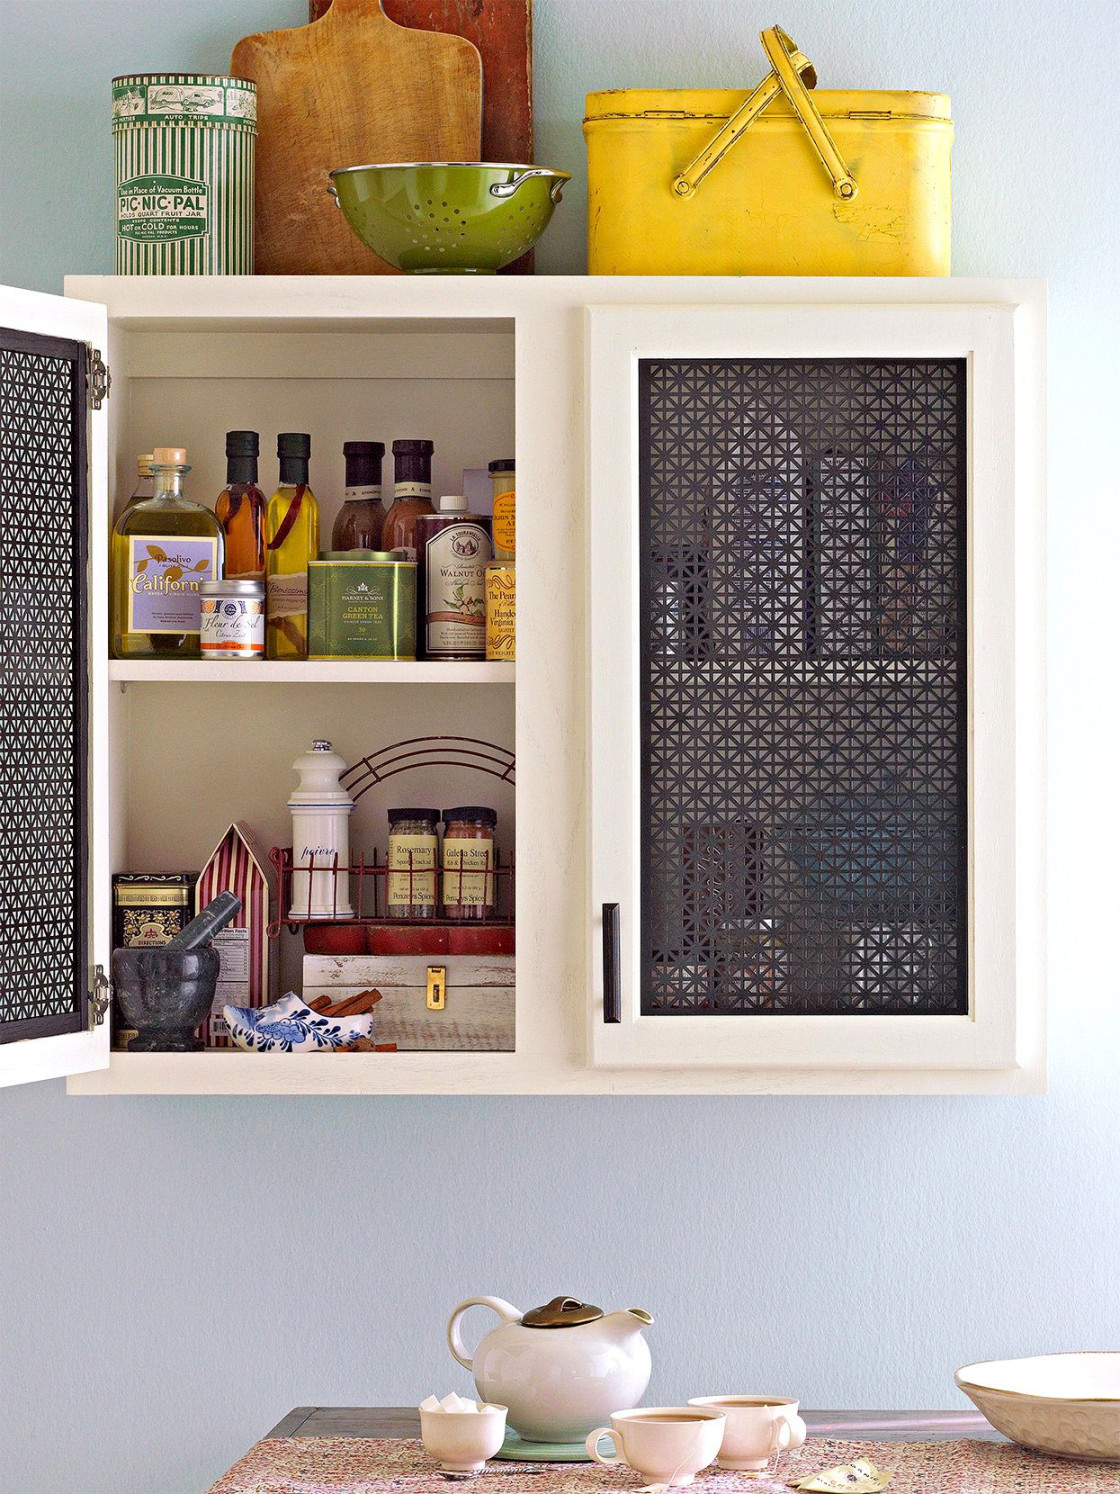 DIY Kitchen Cabinet Updates So You Don